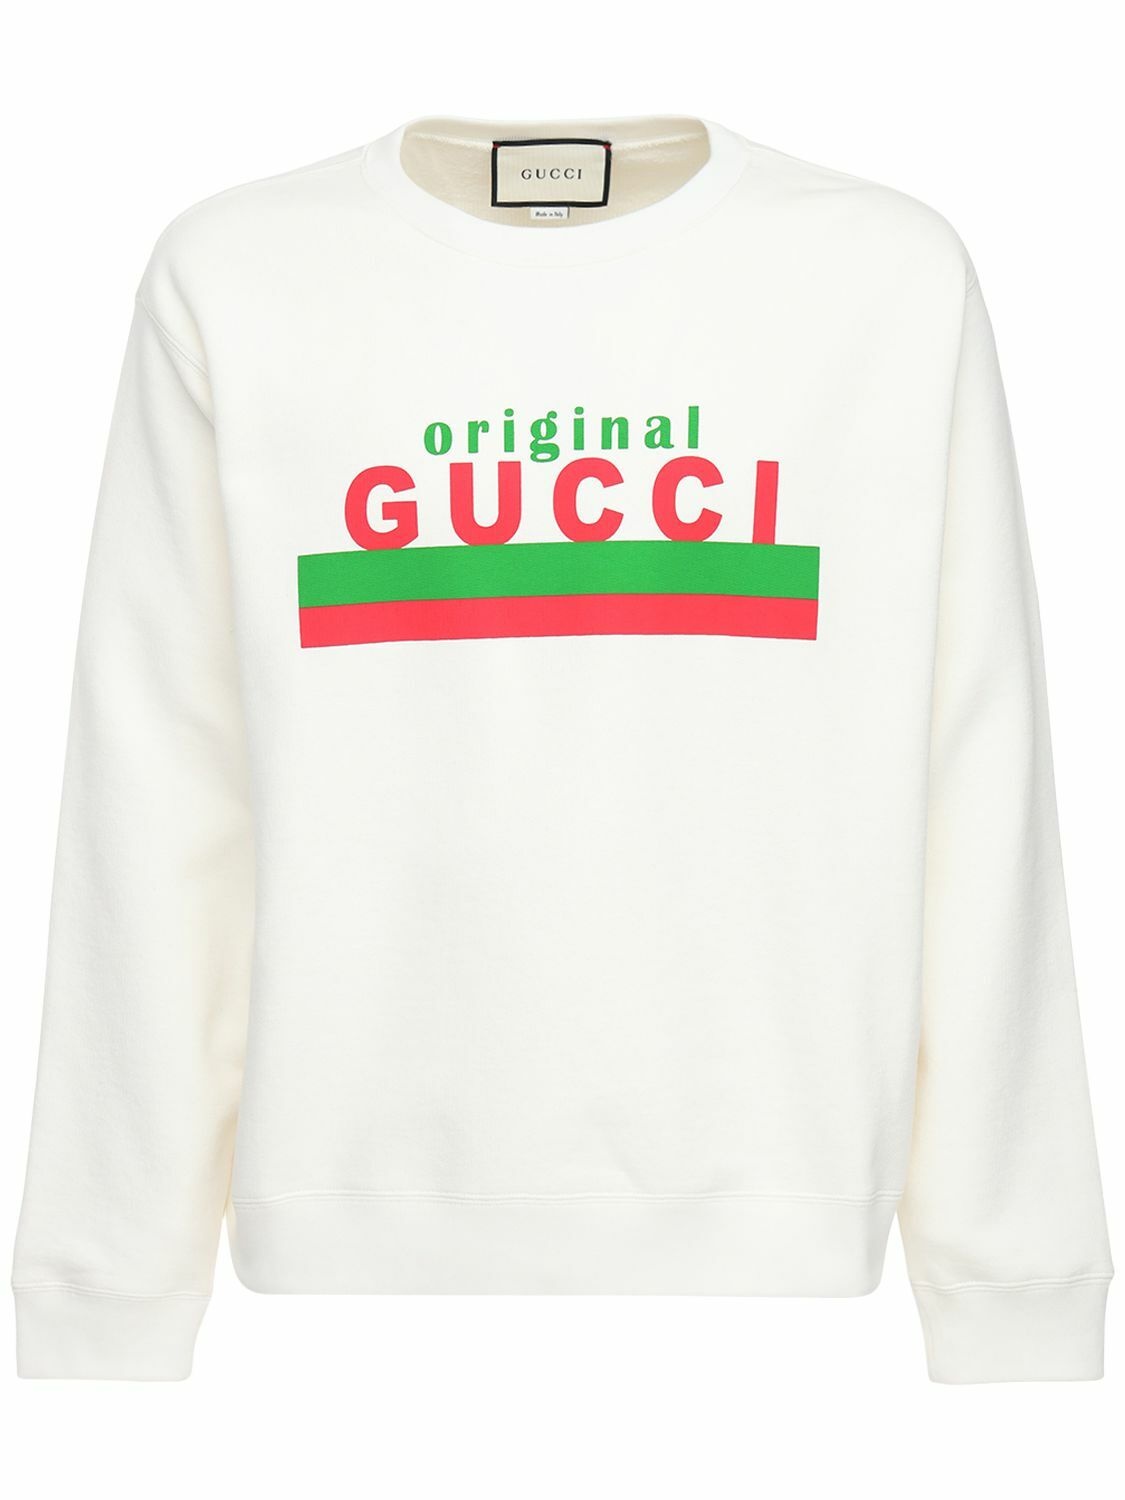 Photo: GUCCI - Gucci Original Print Cotton Sweatshirt